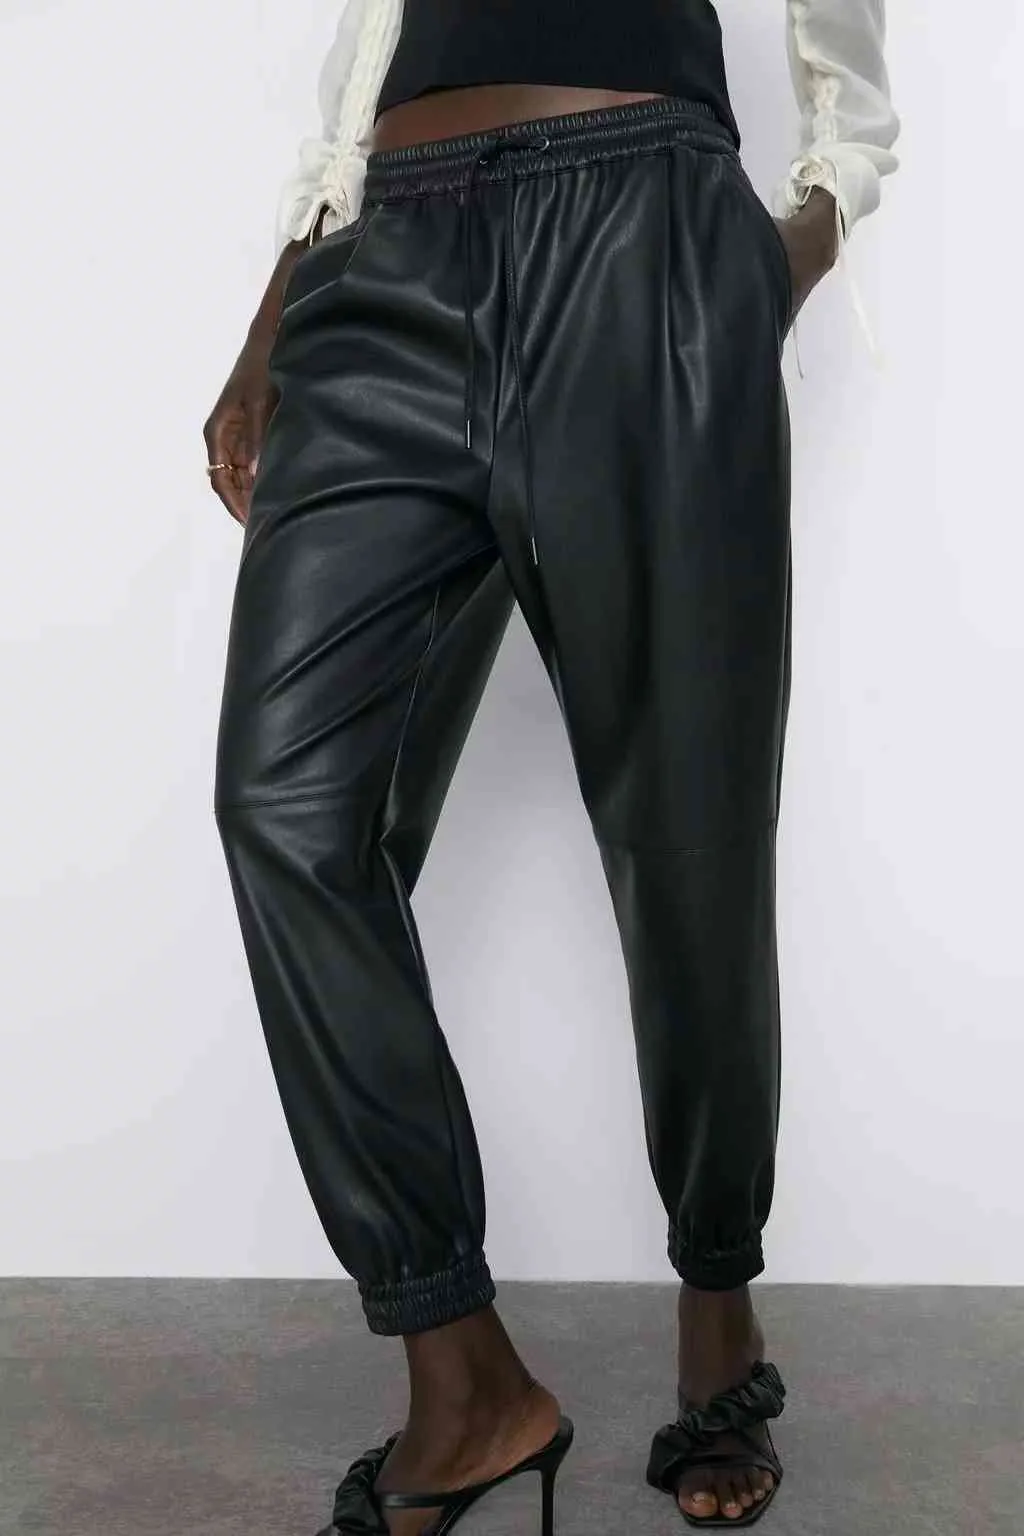 Vintage Khaki PU Pantalones de cuero Mujeres Sweetpants Streetwear Korean Joggers Pantalones de cintura alta 210521